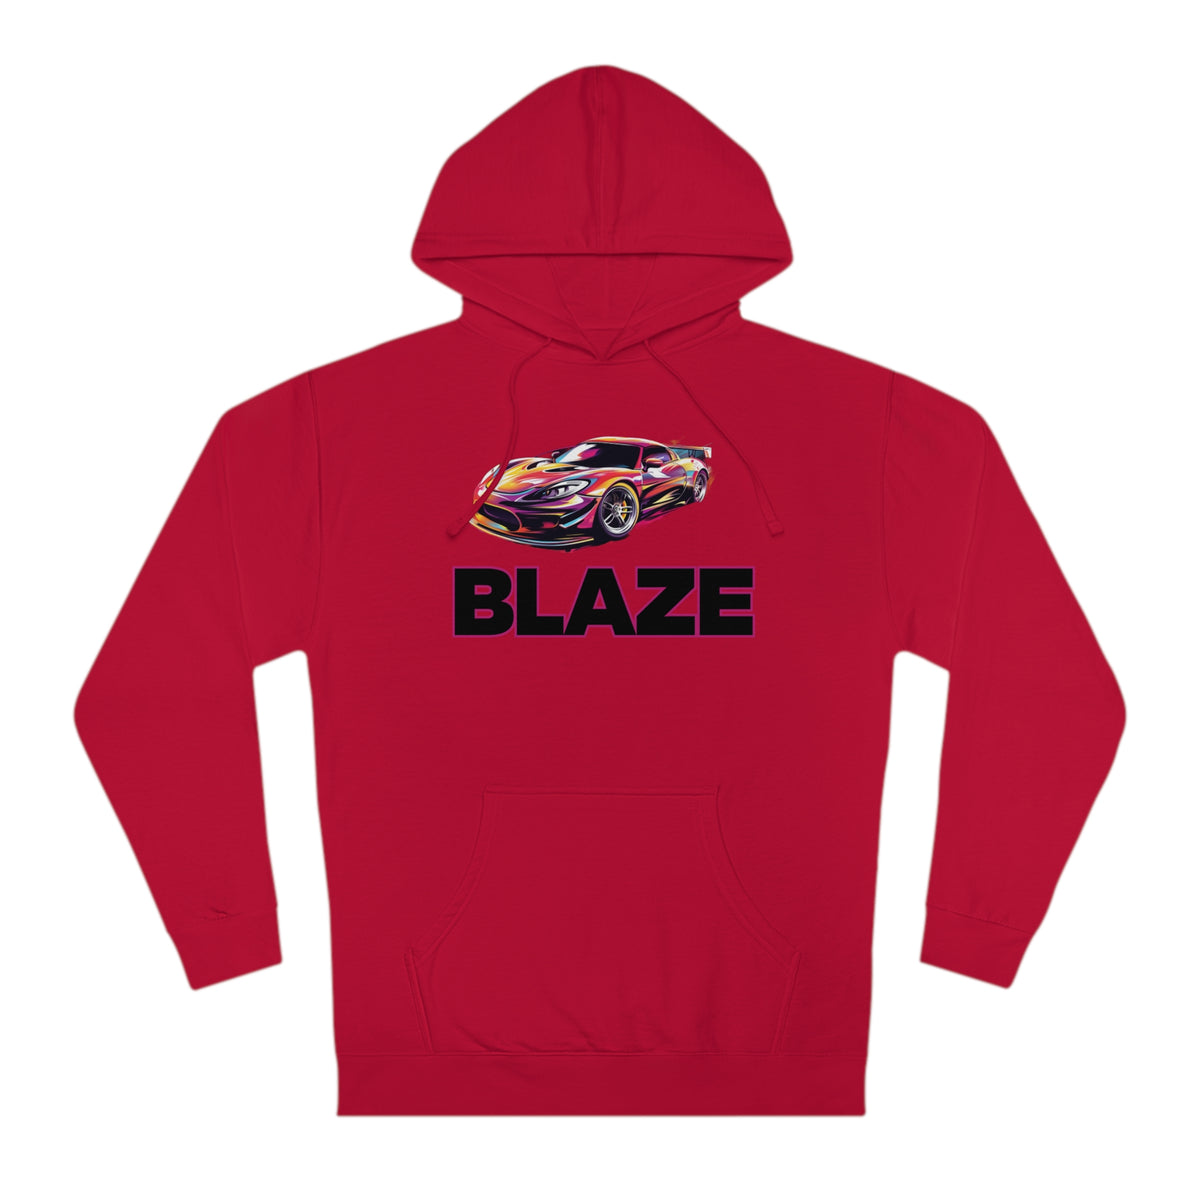 "Blaze the Trail" Hoodie/Hooded Sweatshirt for Racing Aficionados